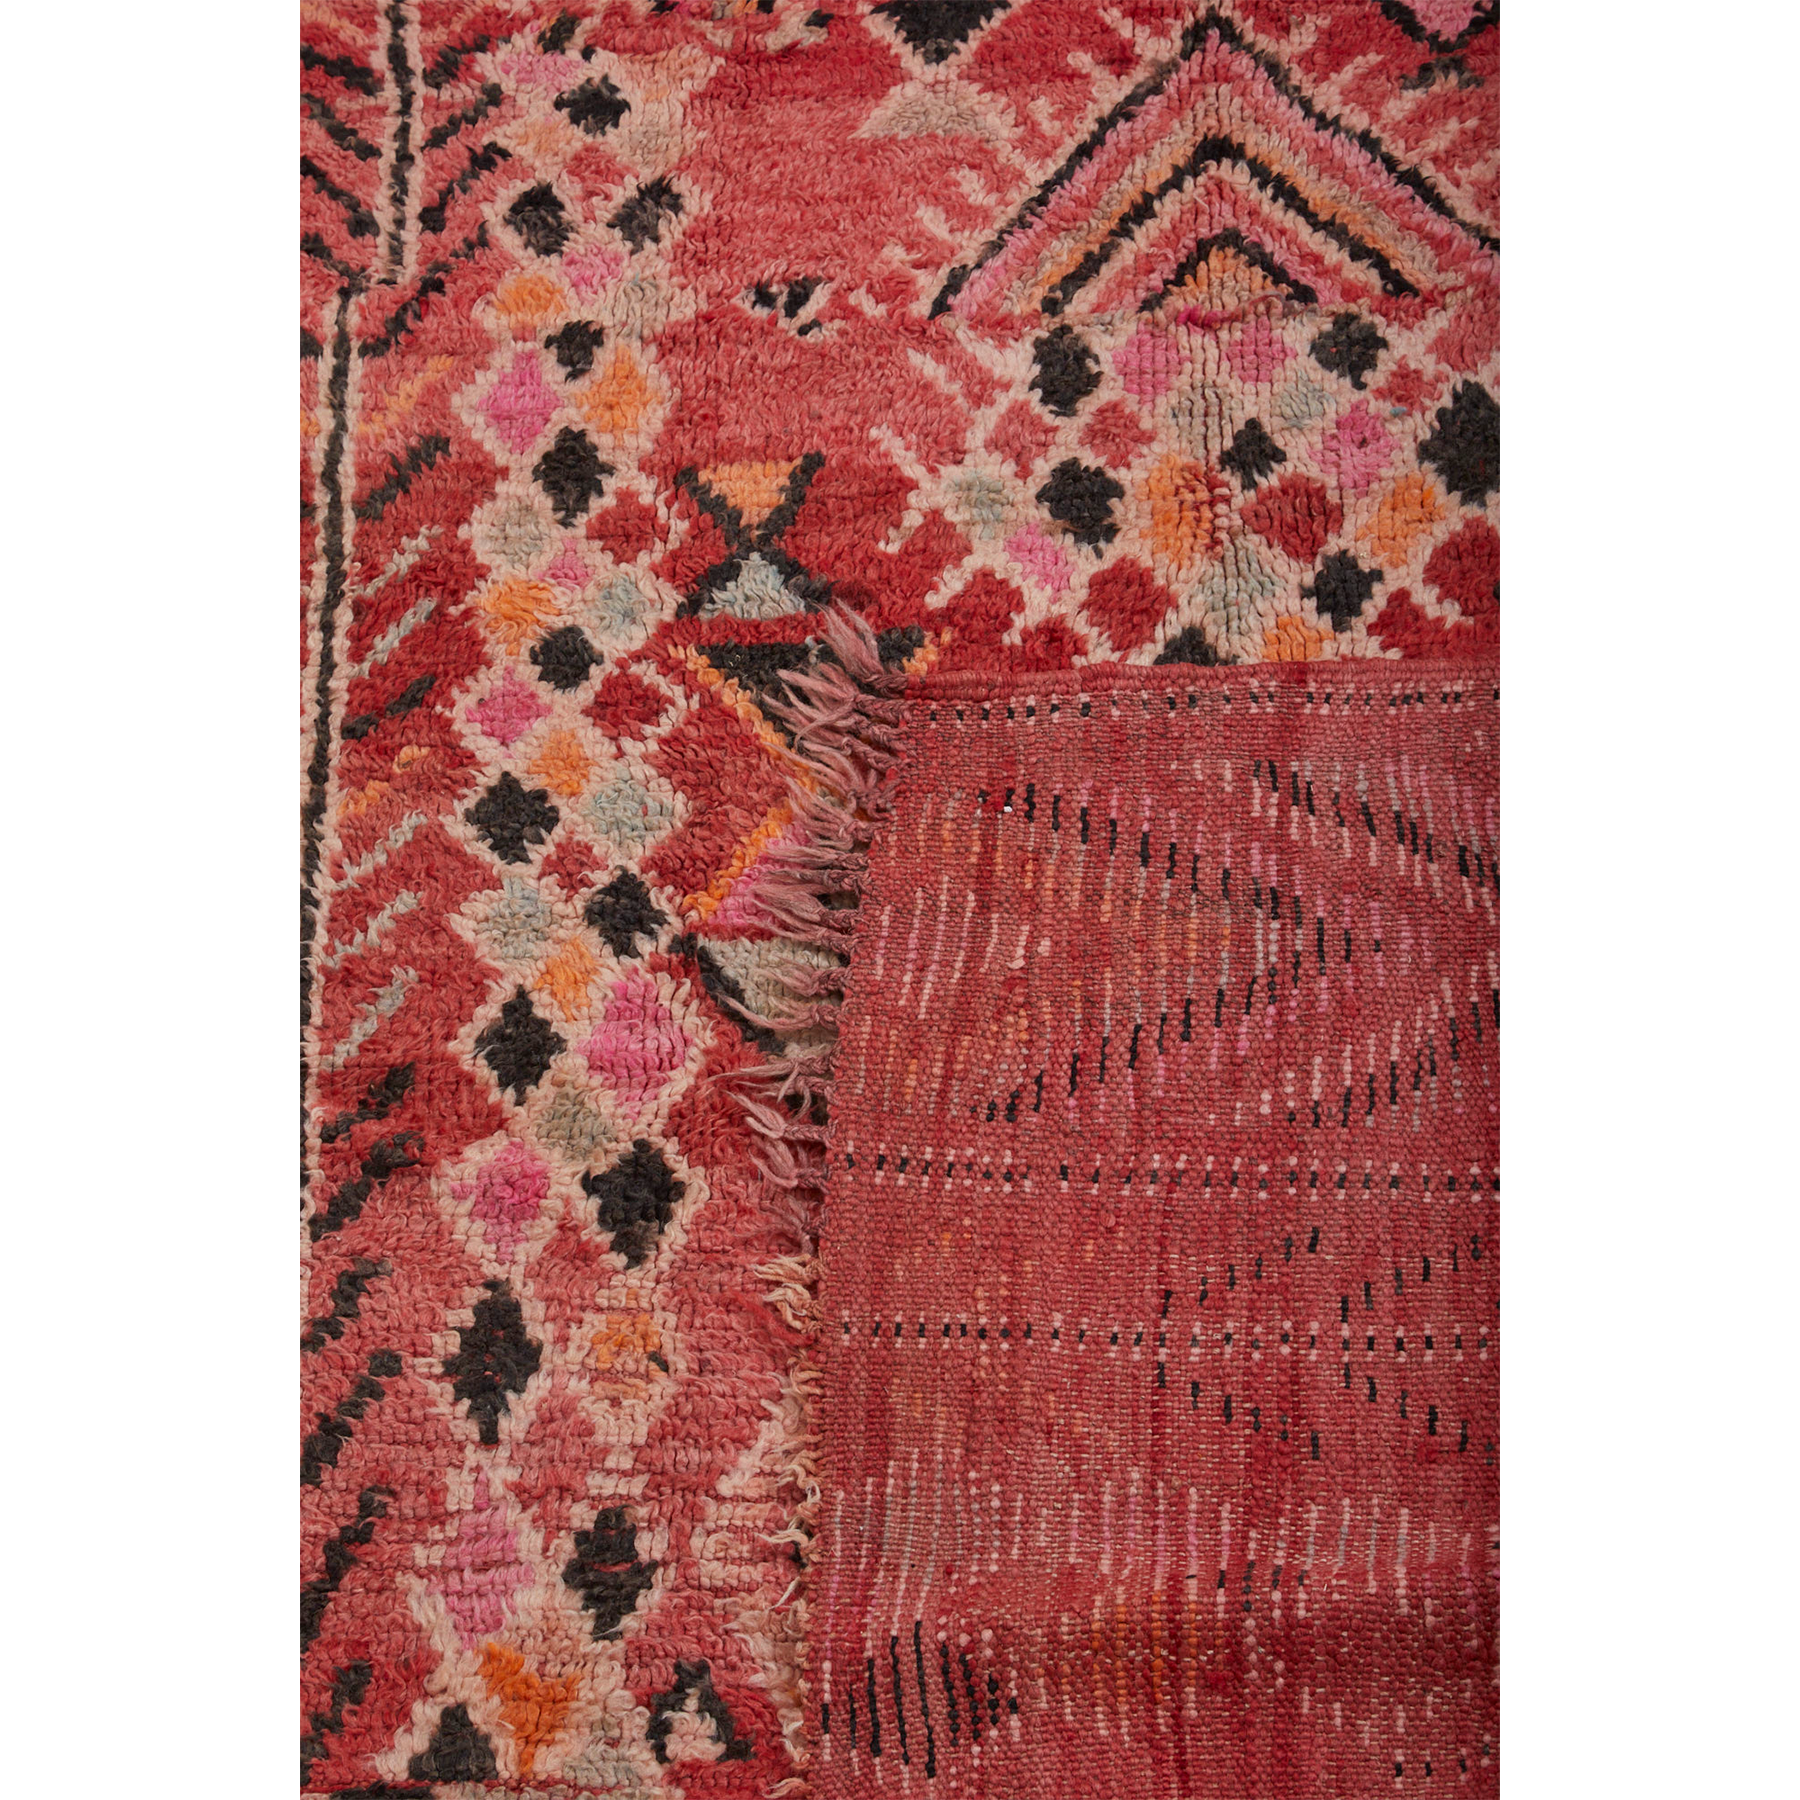 MERYEM - Tribal Moroccan rug with chevron border